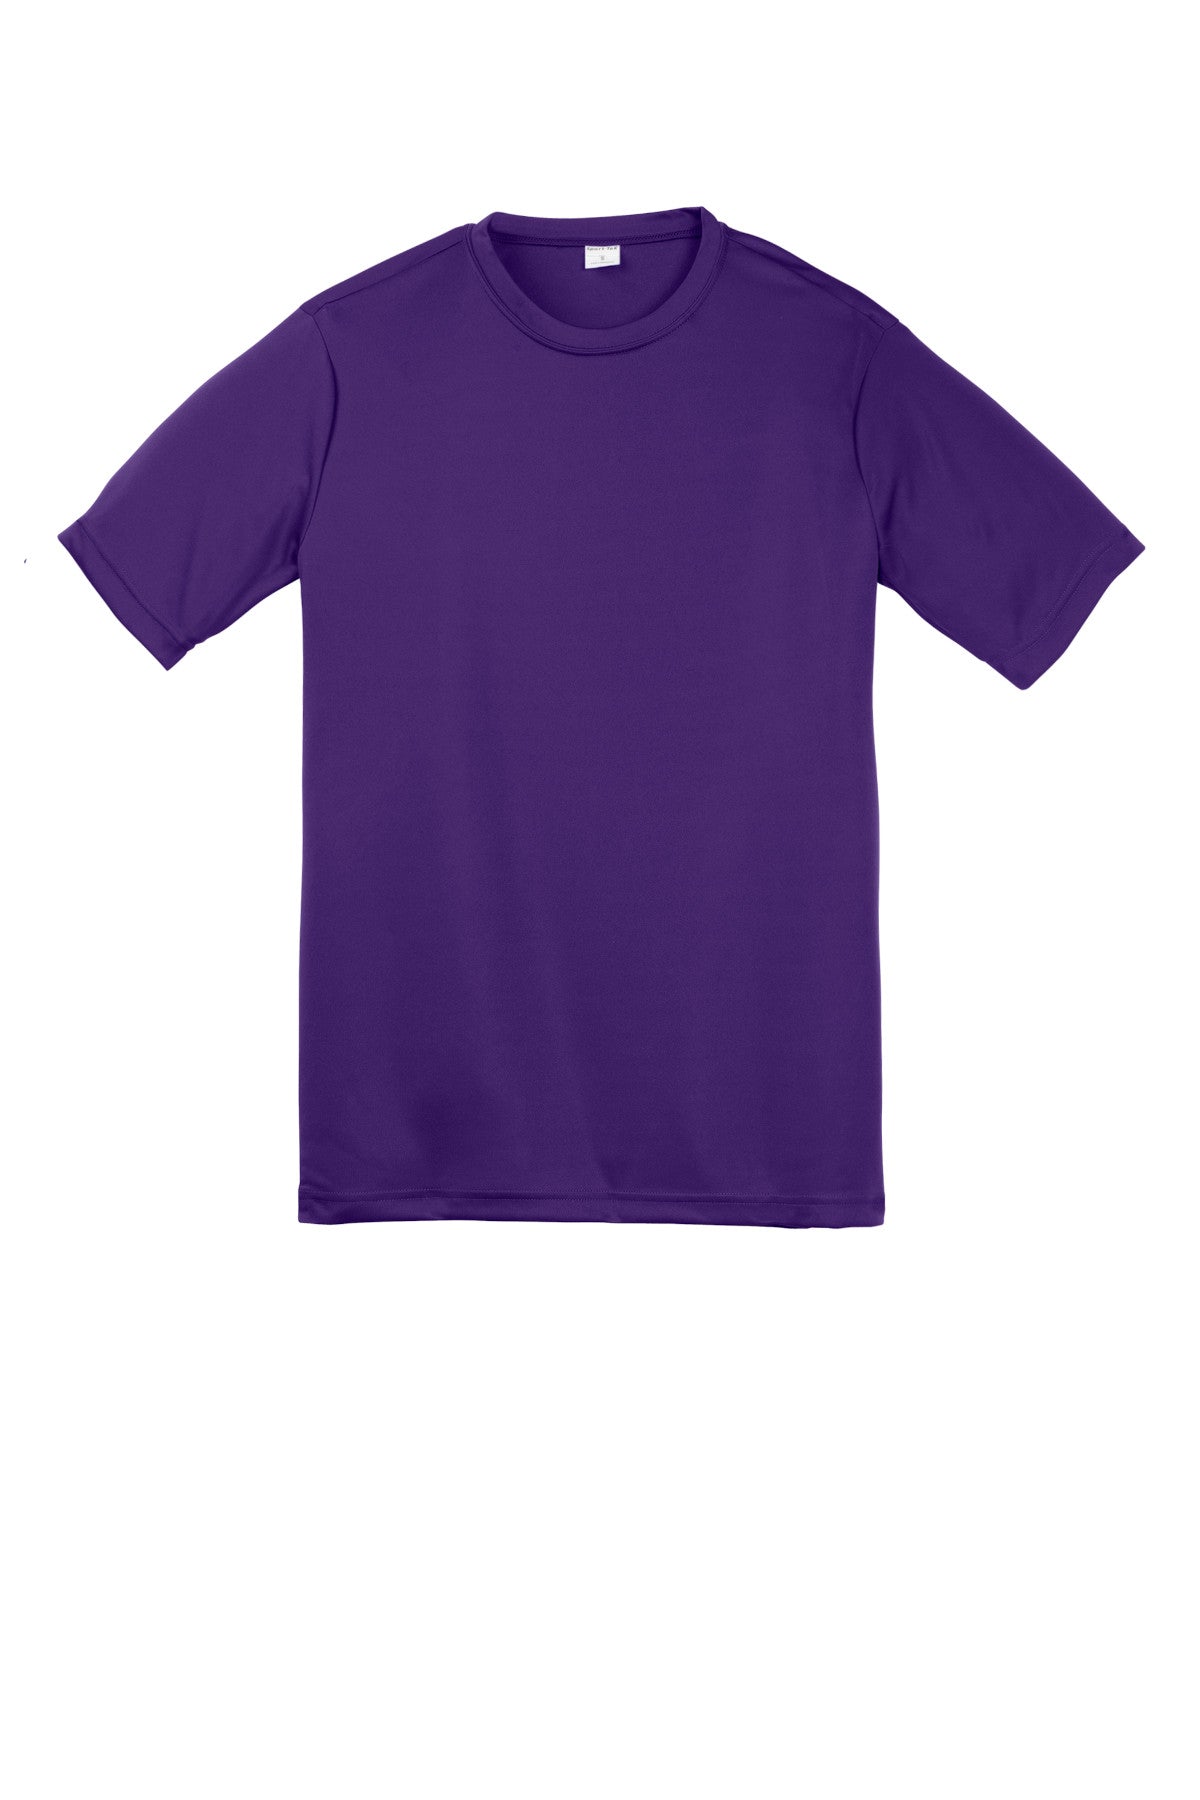 Sport-Tek Yst350 Polyester Youth T-Shirt Yth Small / Purple